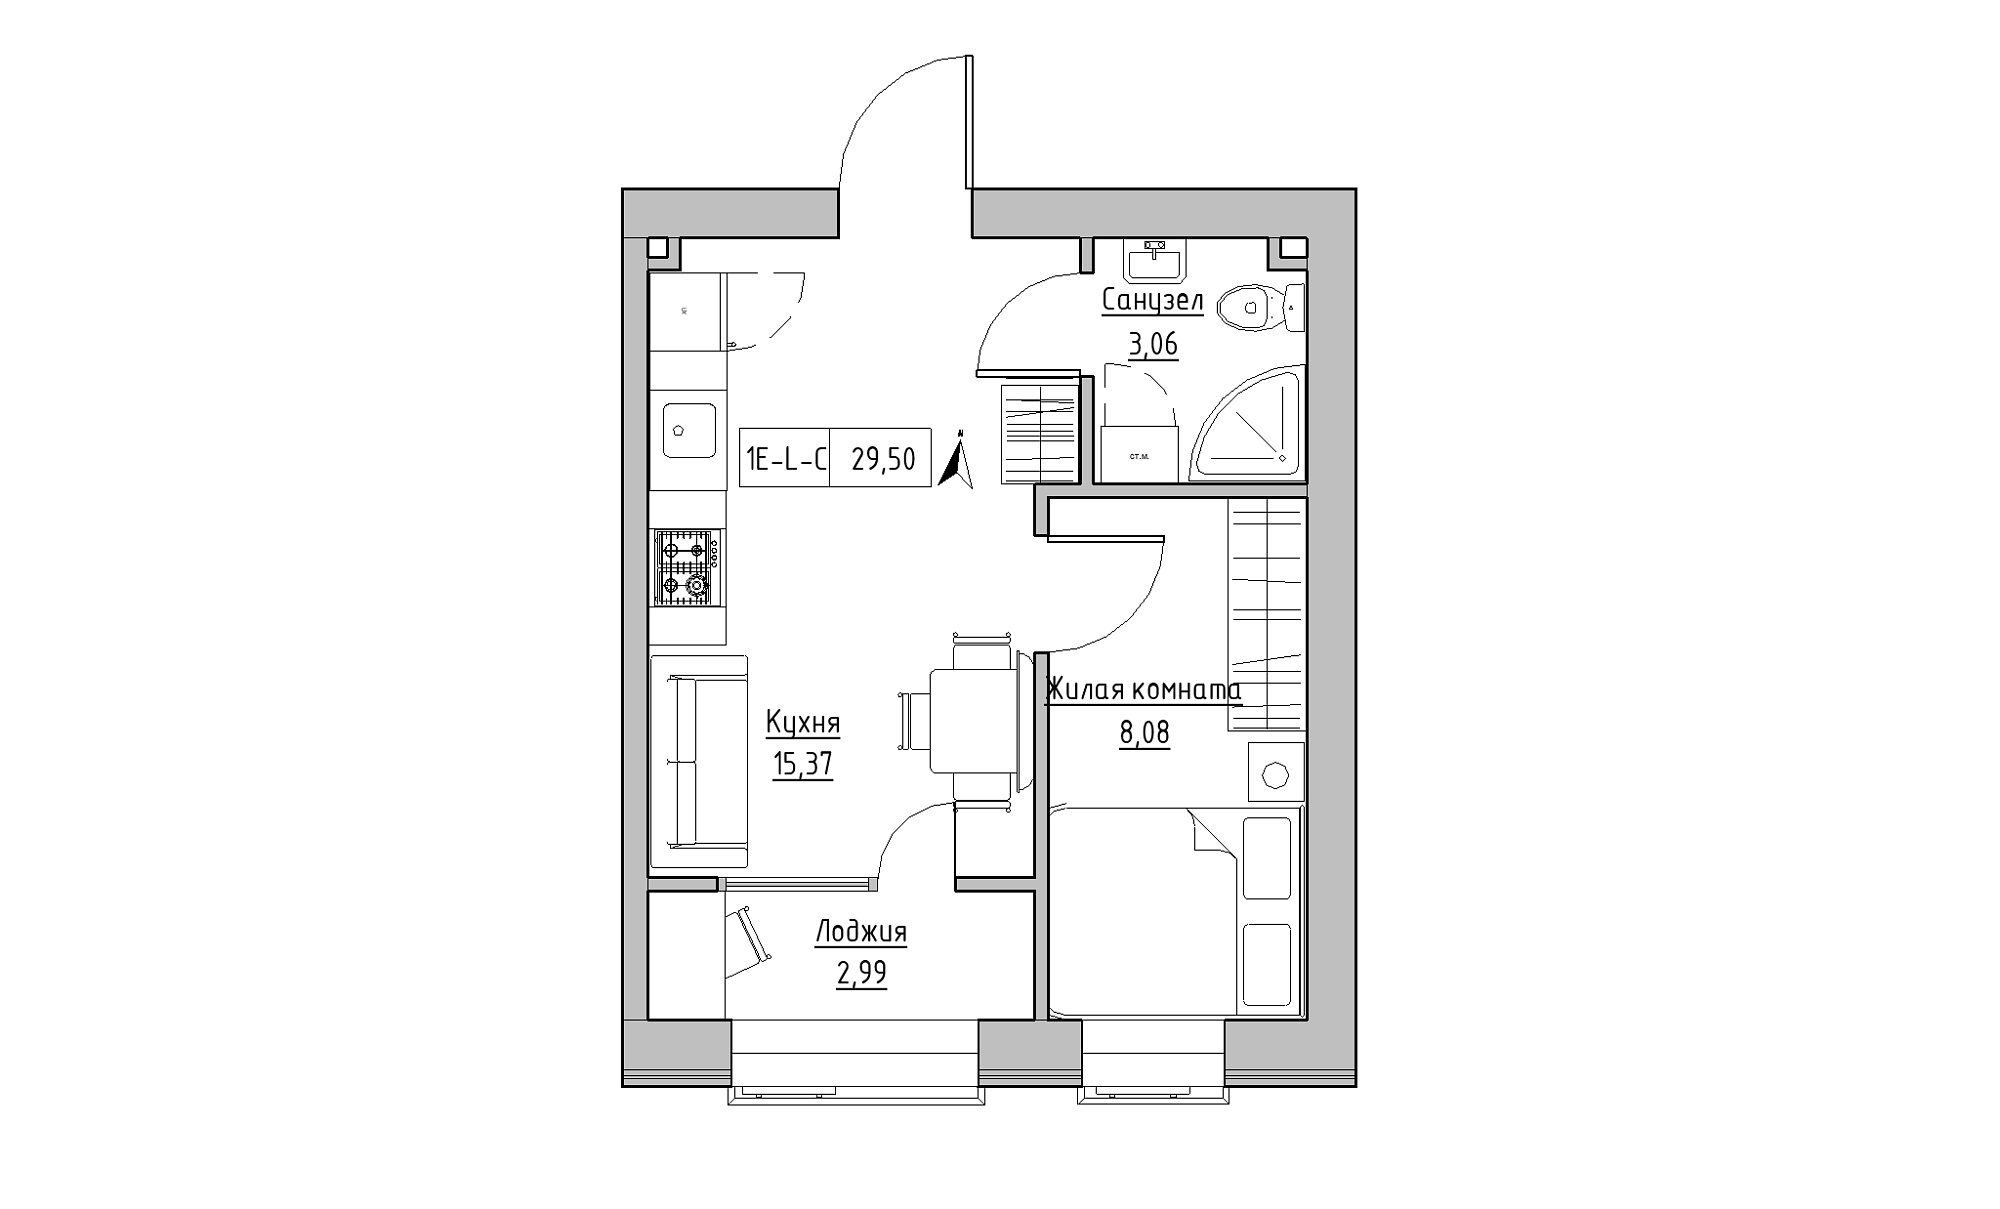 Planning 1-rm flats area 29.5m2, KS-016-01/0006.